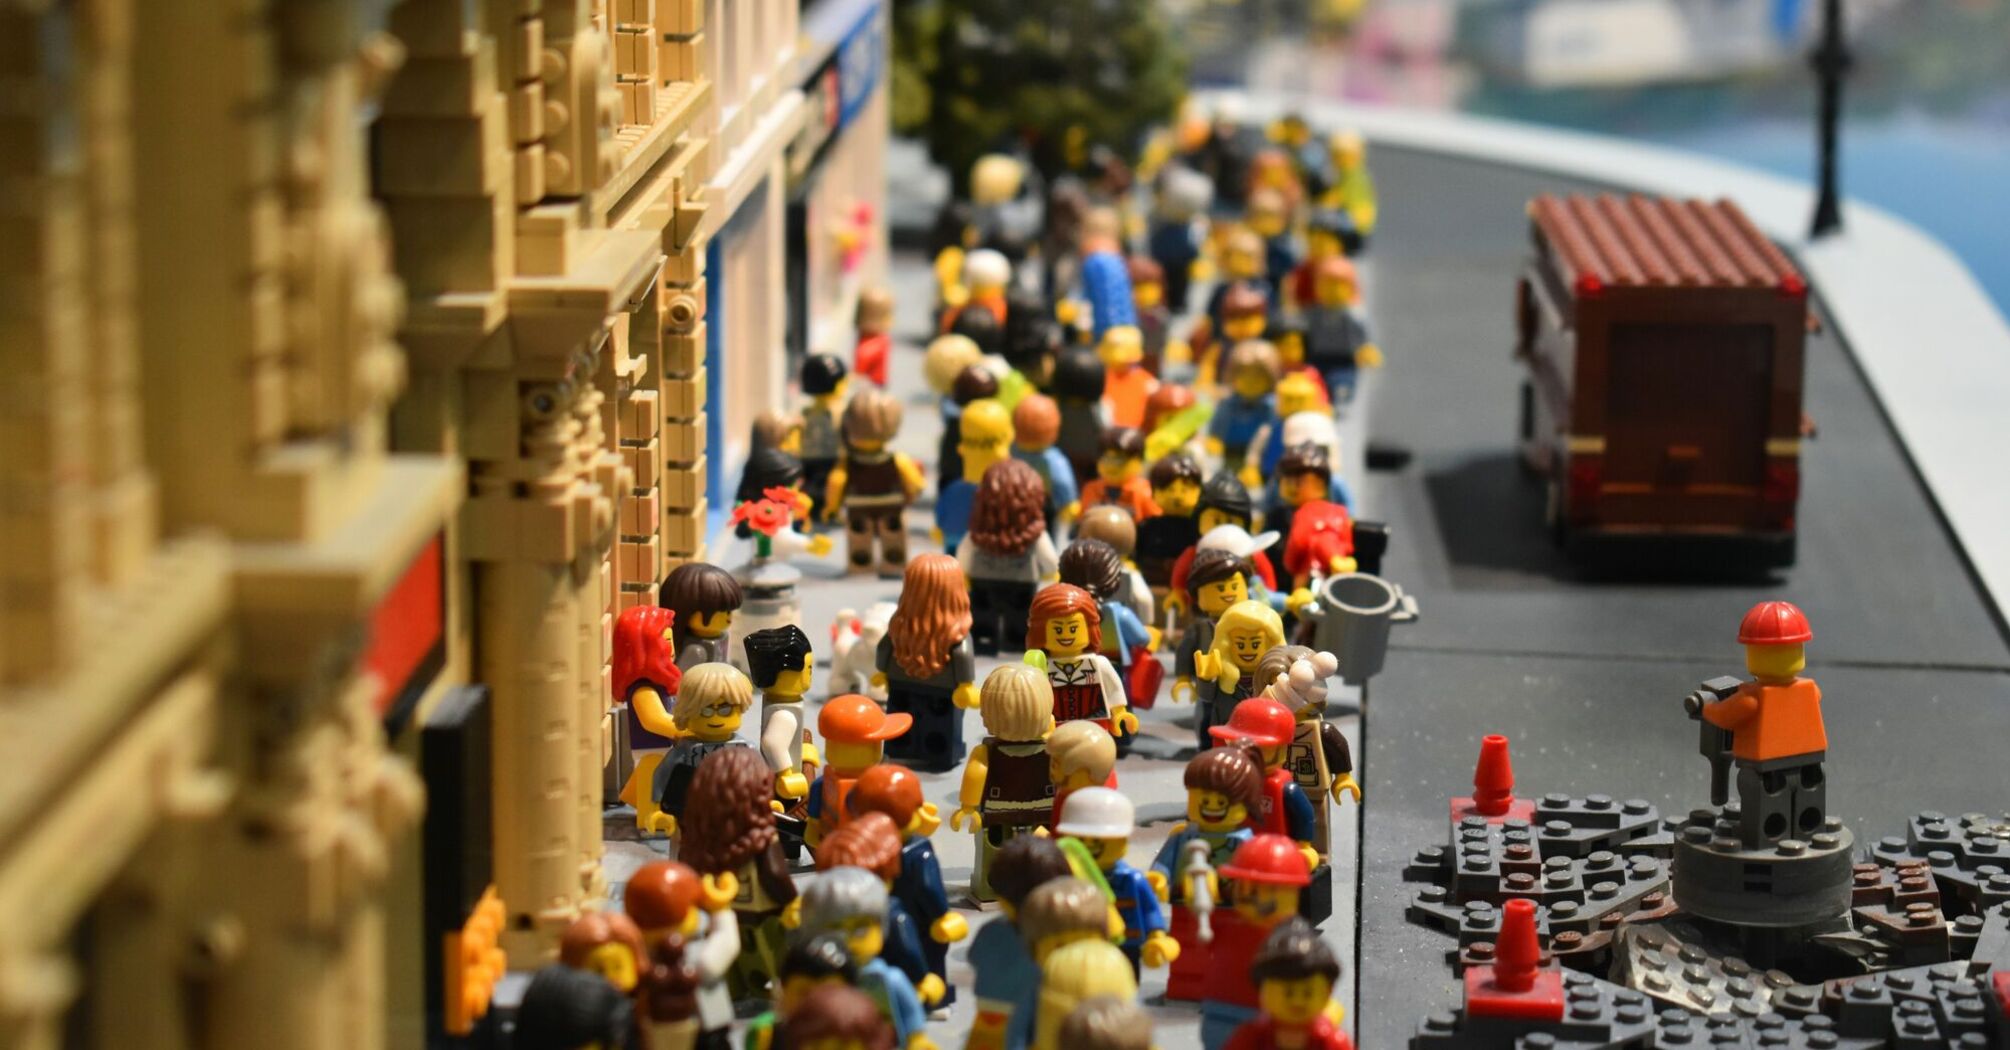 A vibrant LEGO scene depicting numerous LEGO minifigures bustling through a city street